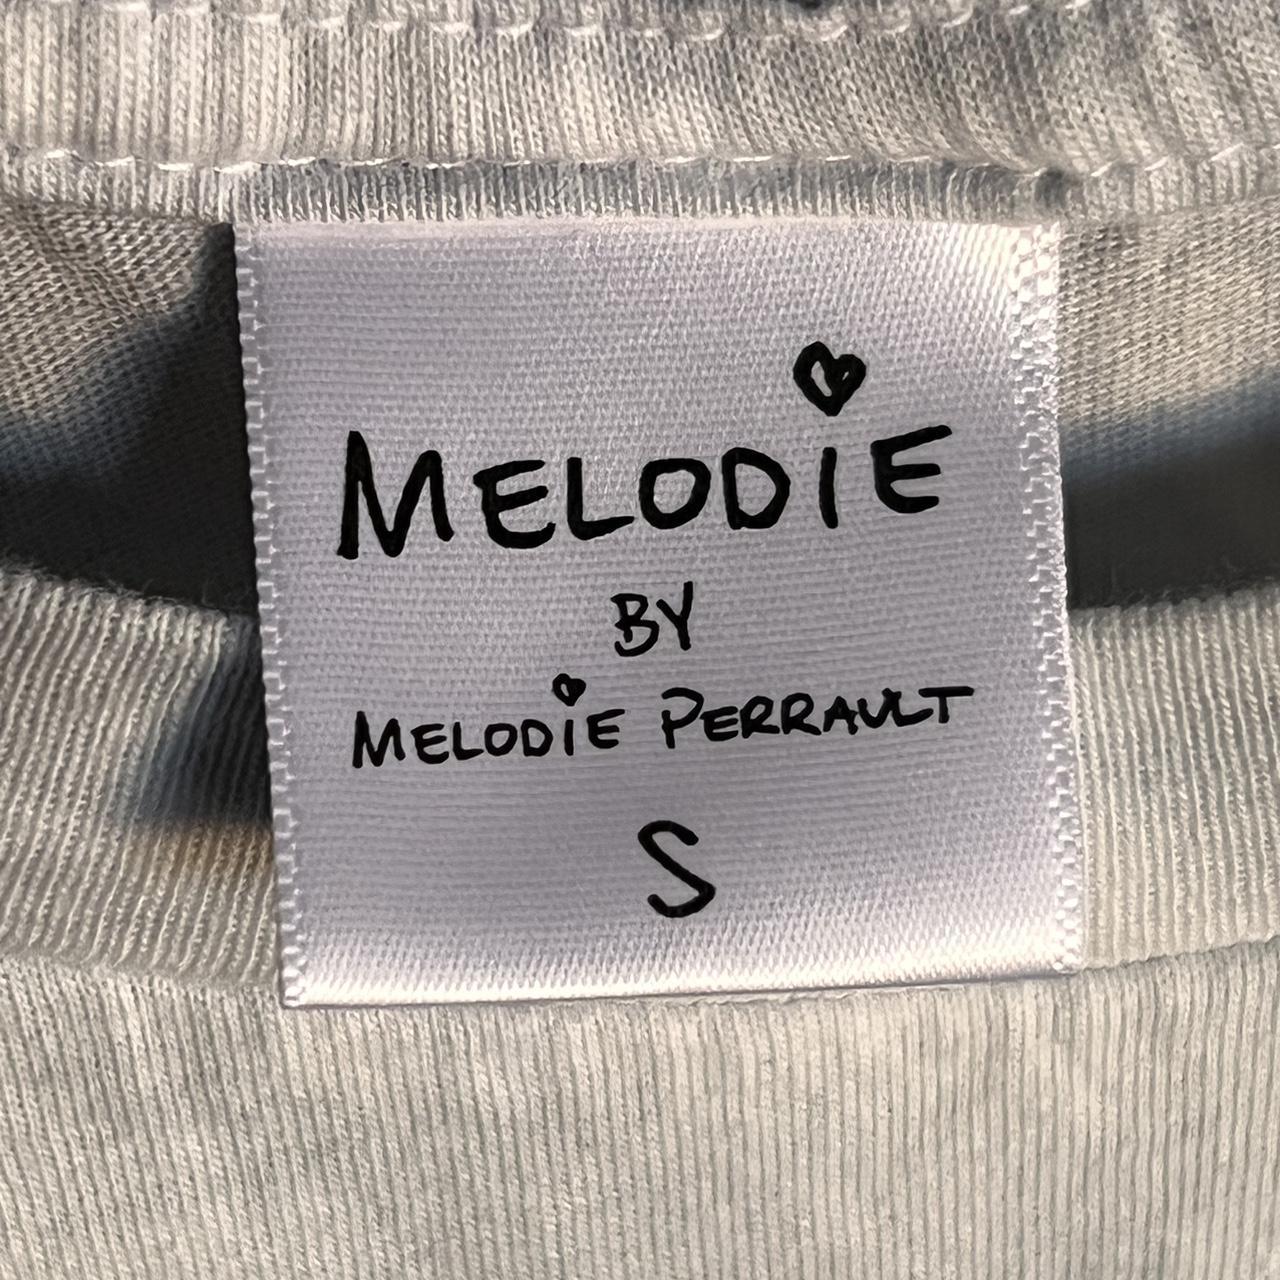 Melodie Perrault, gently used tshirt. Comfy and - Depop